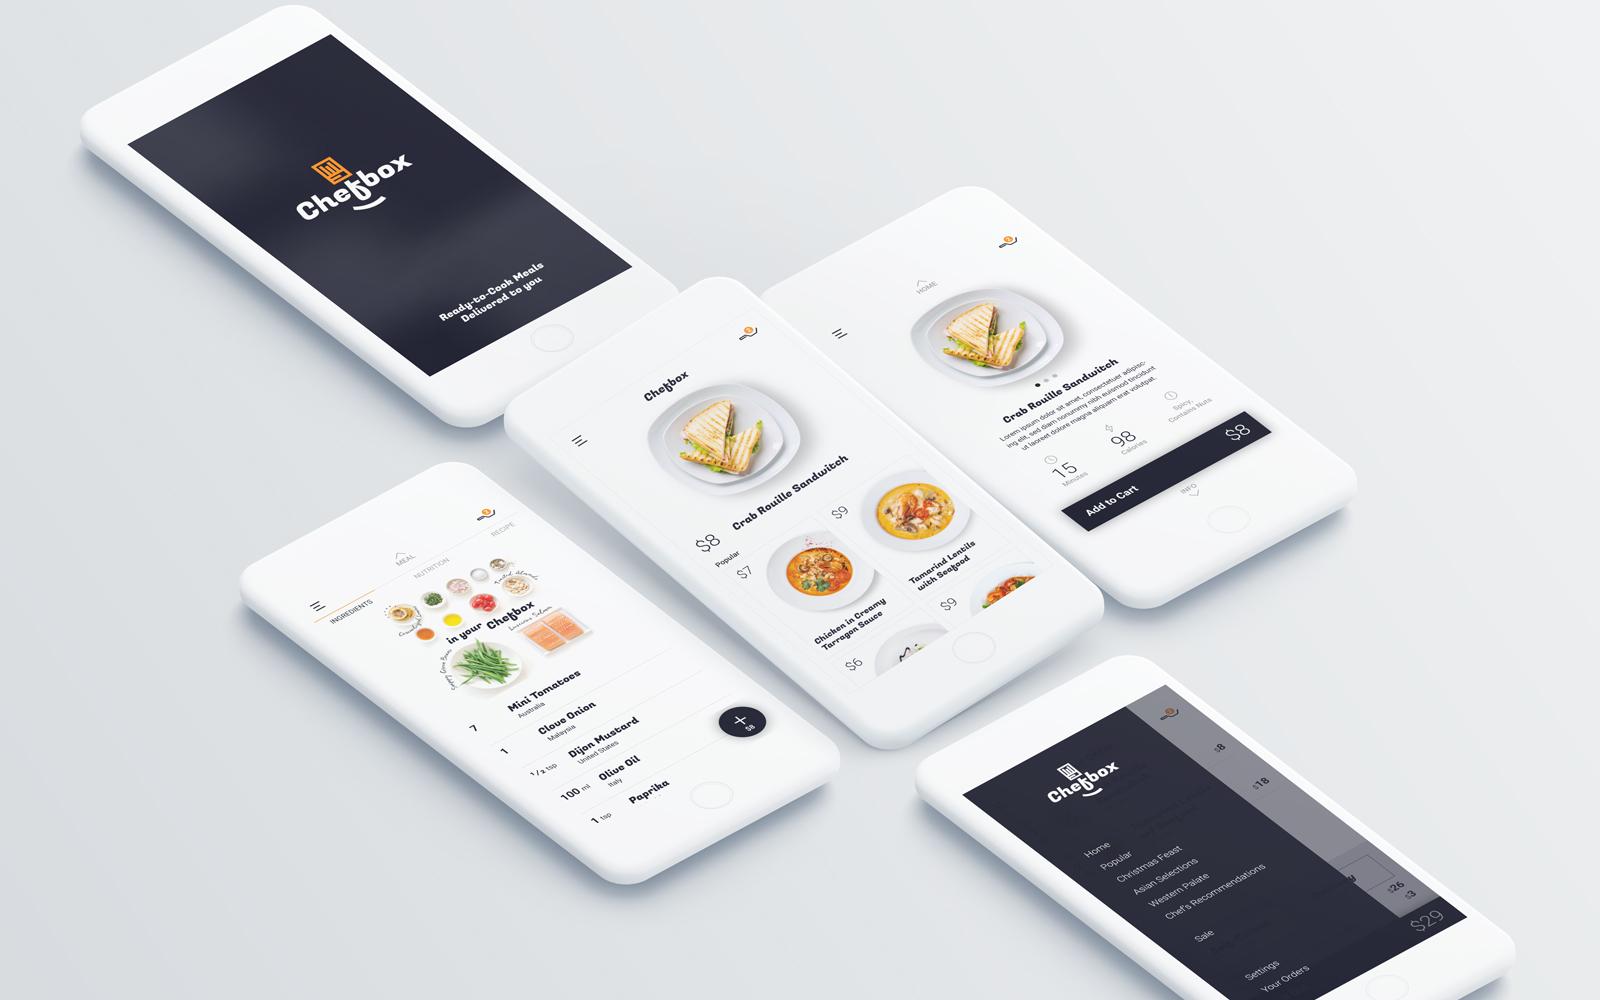 General Mobile App Logo - Chefbox App | Leow Hou Teng. Design & Digital Marketing